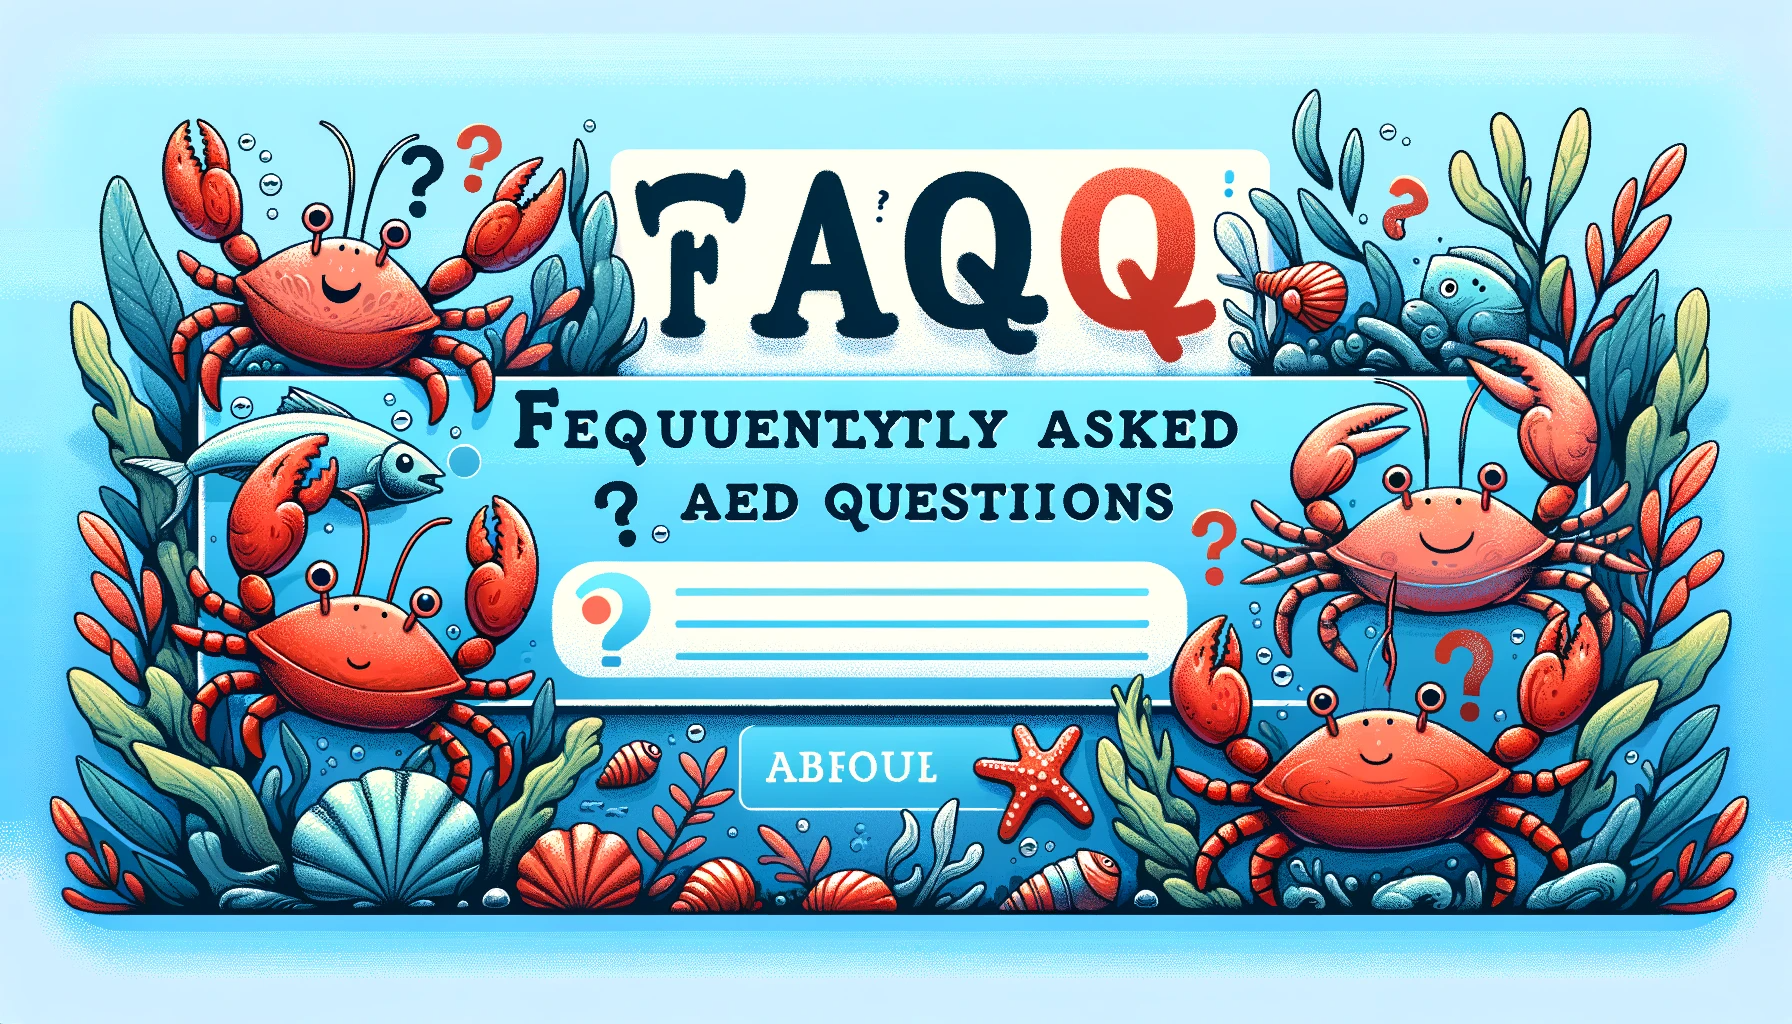 FAQ Banner